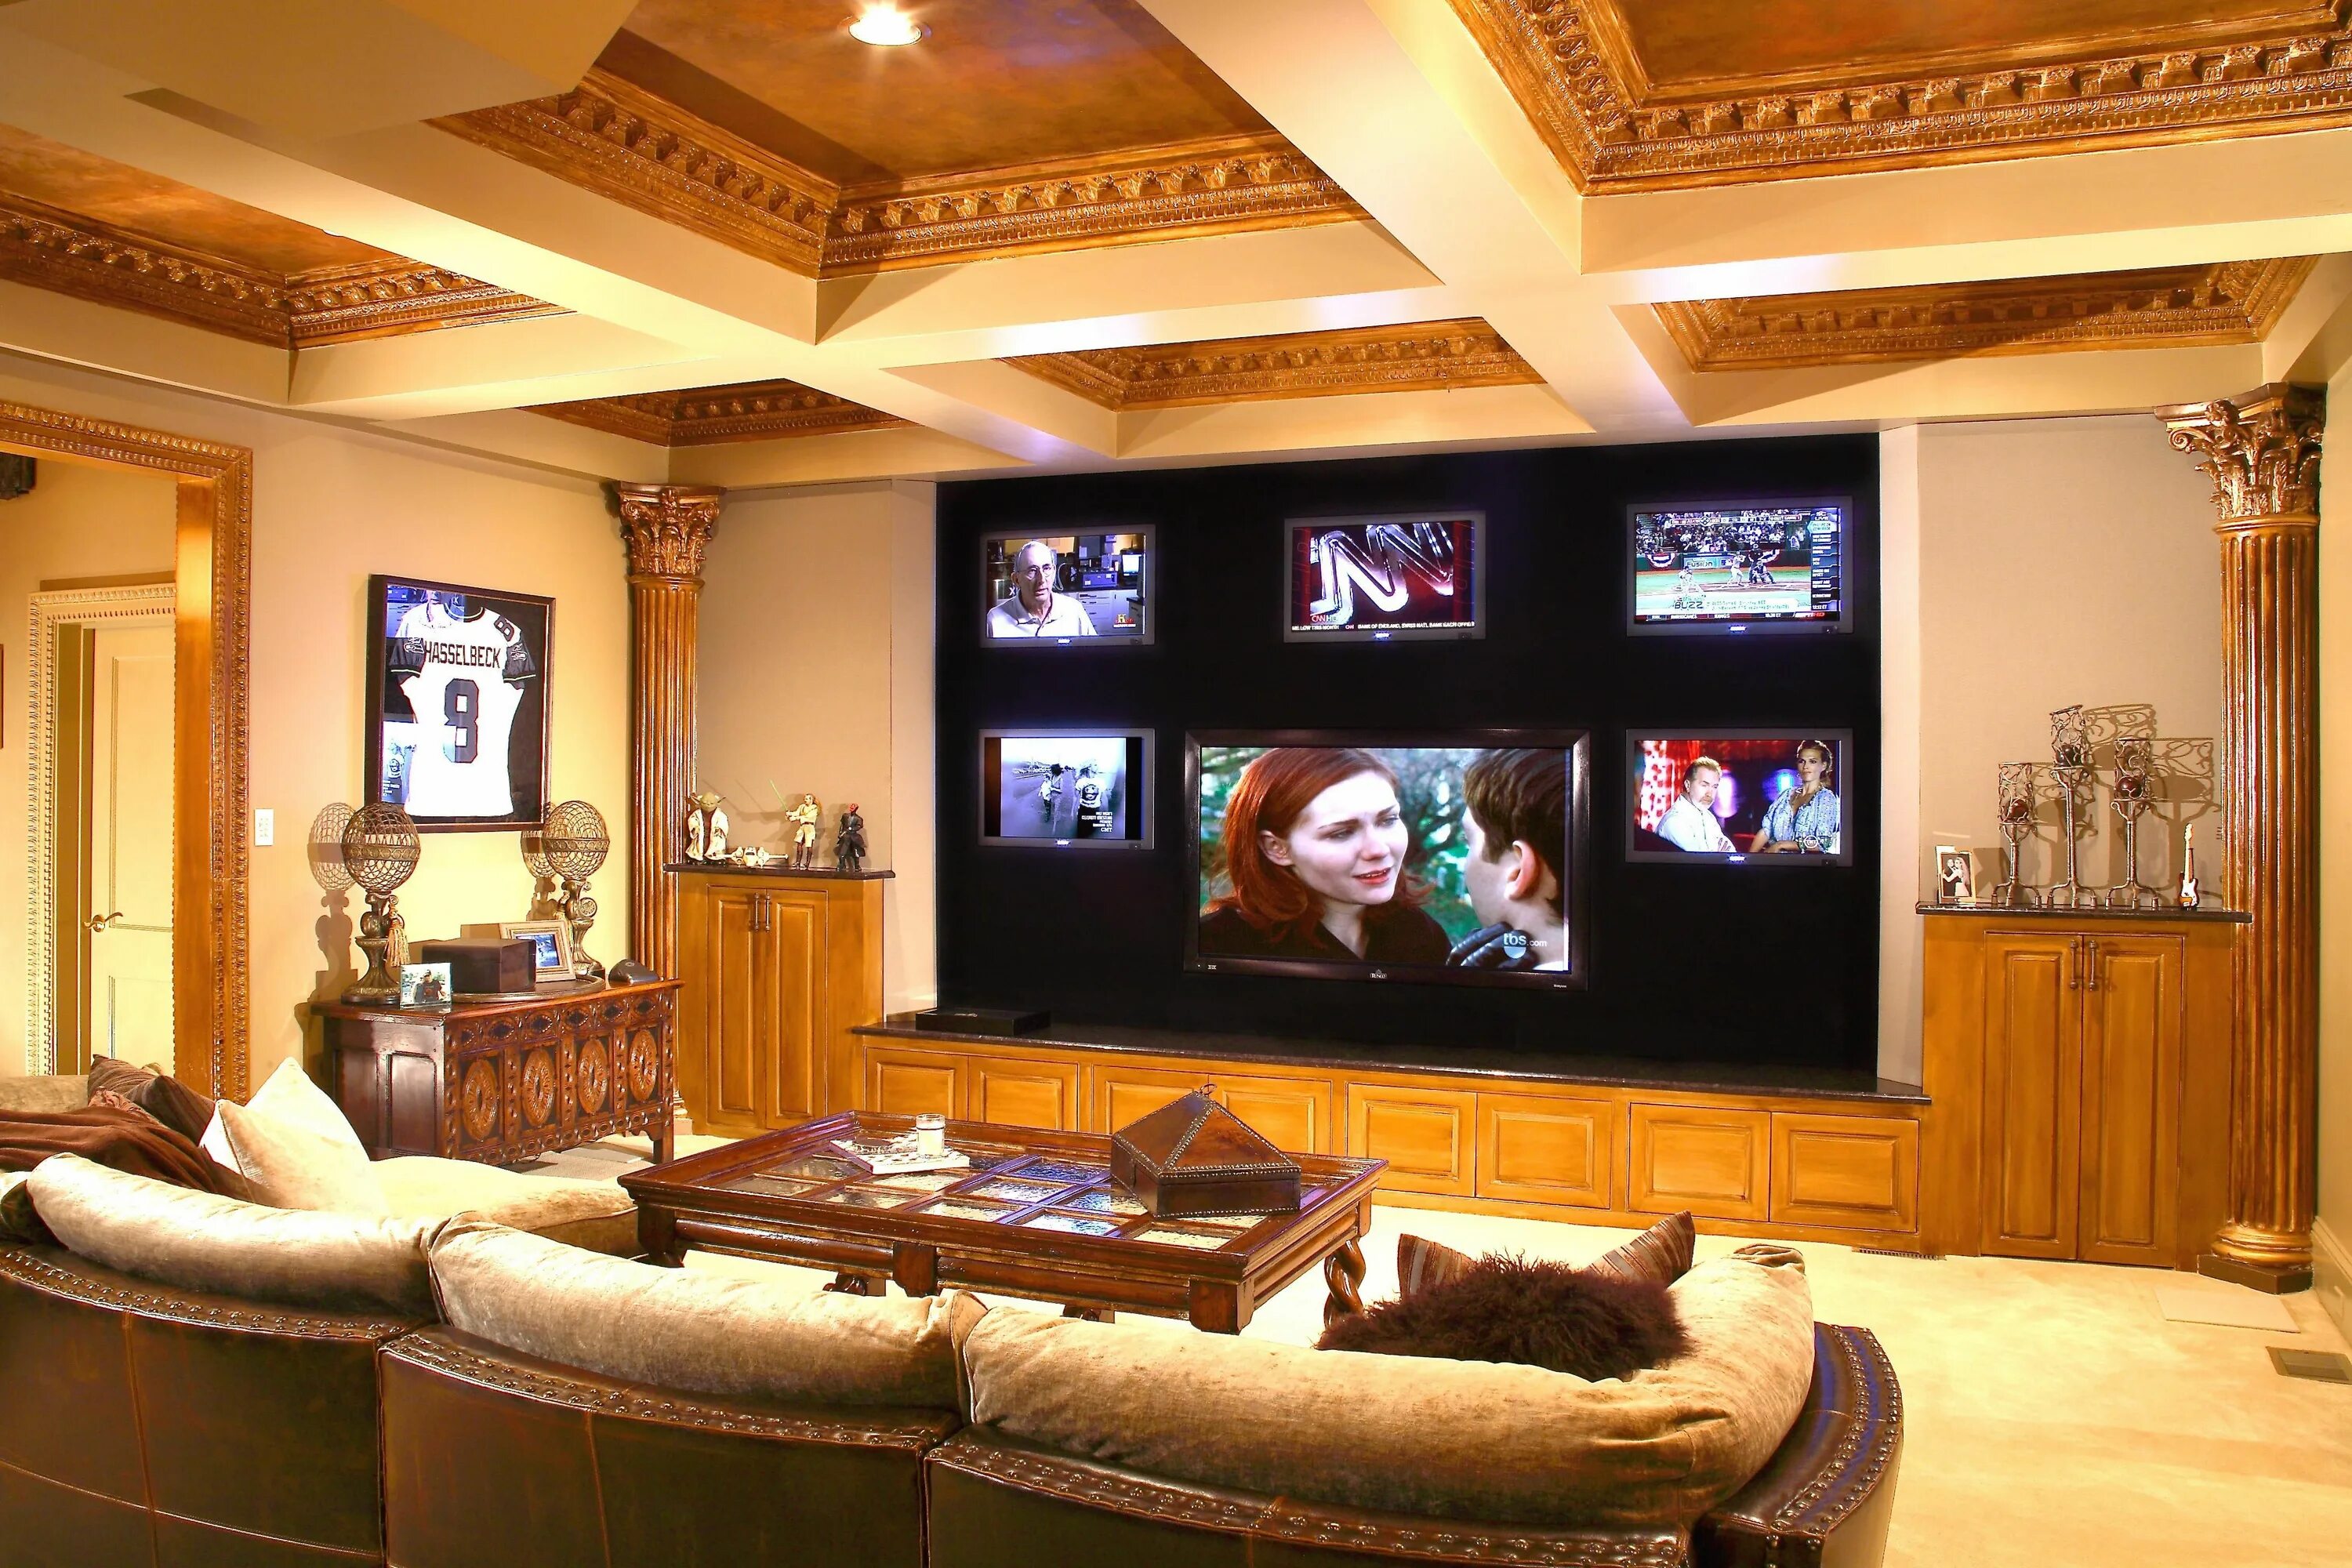 Выбери телевизор для комнаты. Домашний кинотеатр интерьер. Комната с большим телевизором. Большой телевизор в интерьере. Домашний кинотеатр с телевизором.